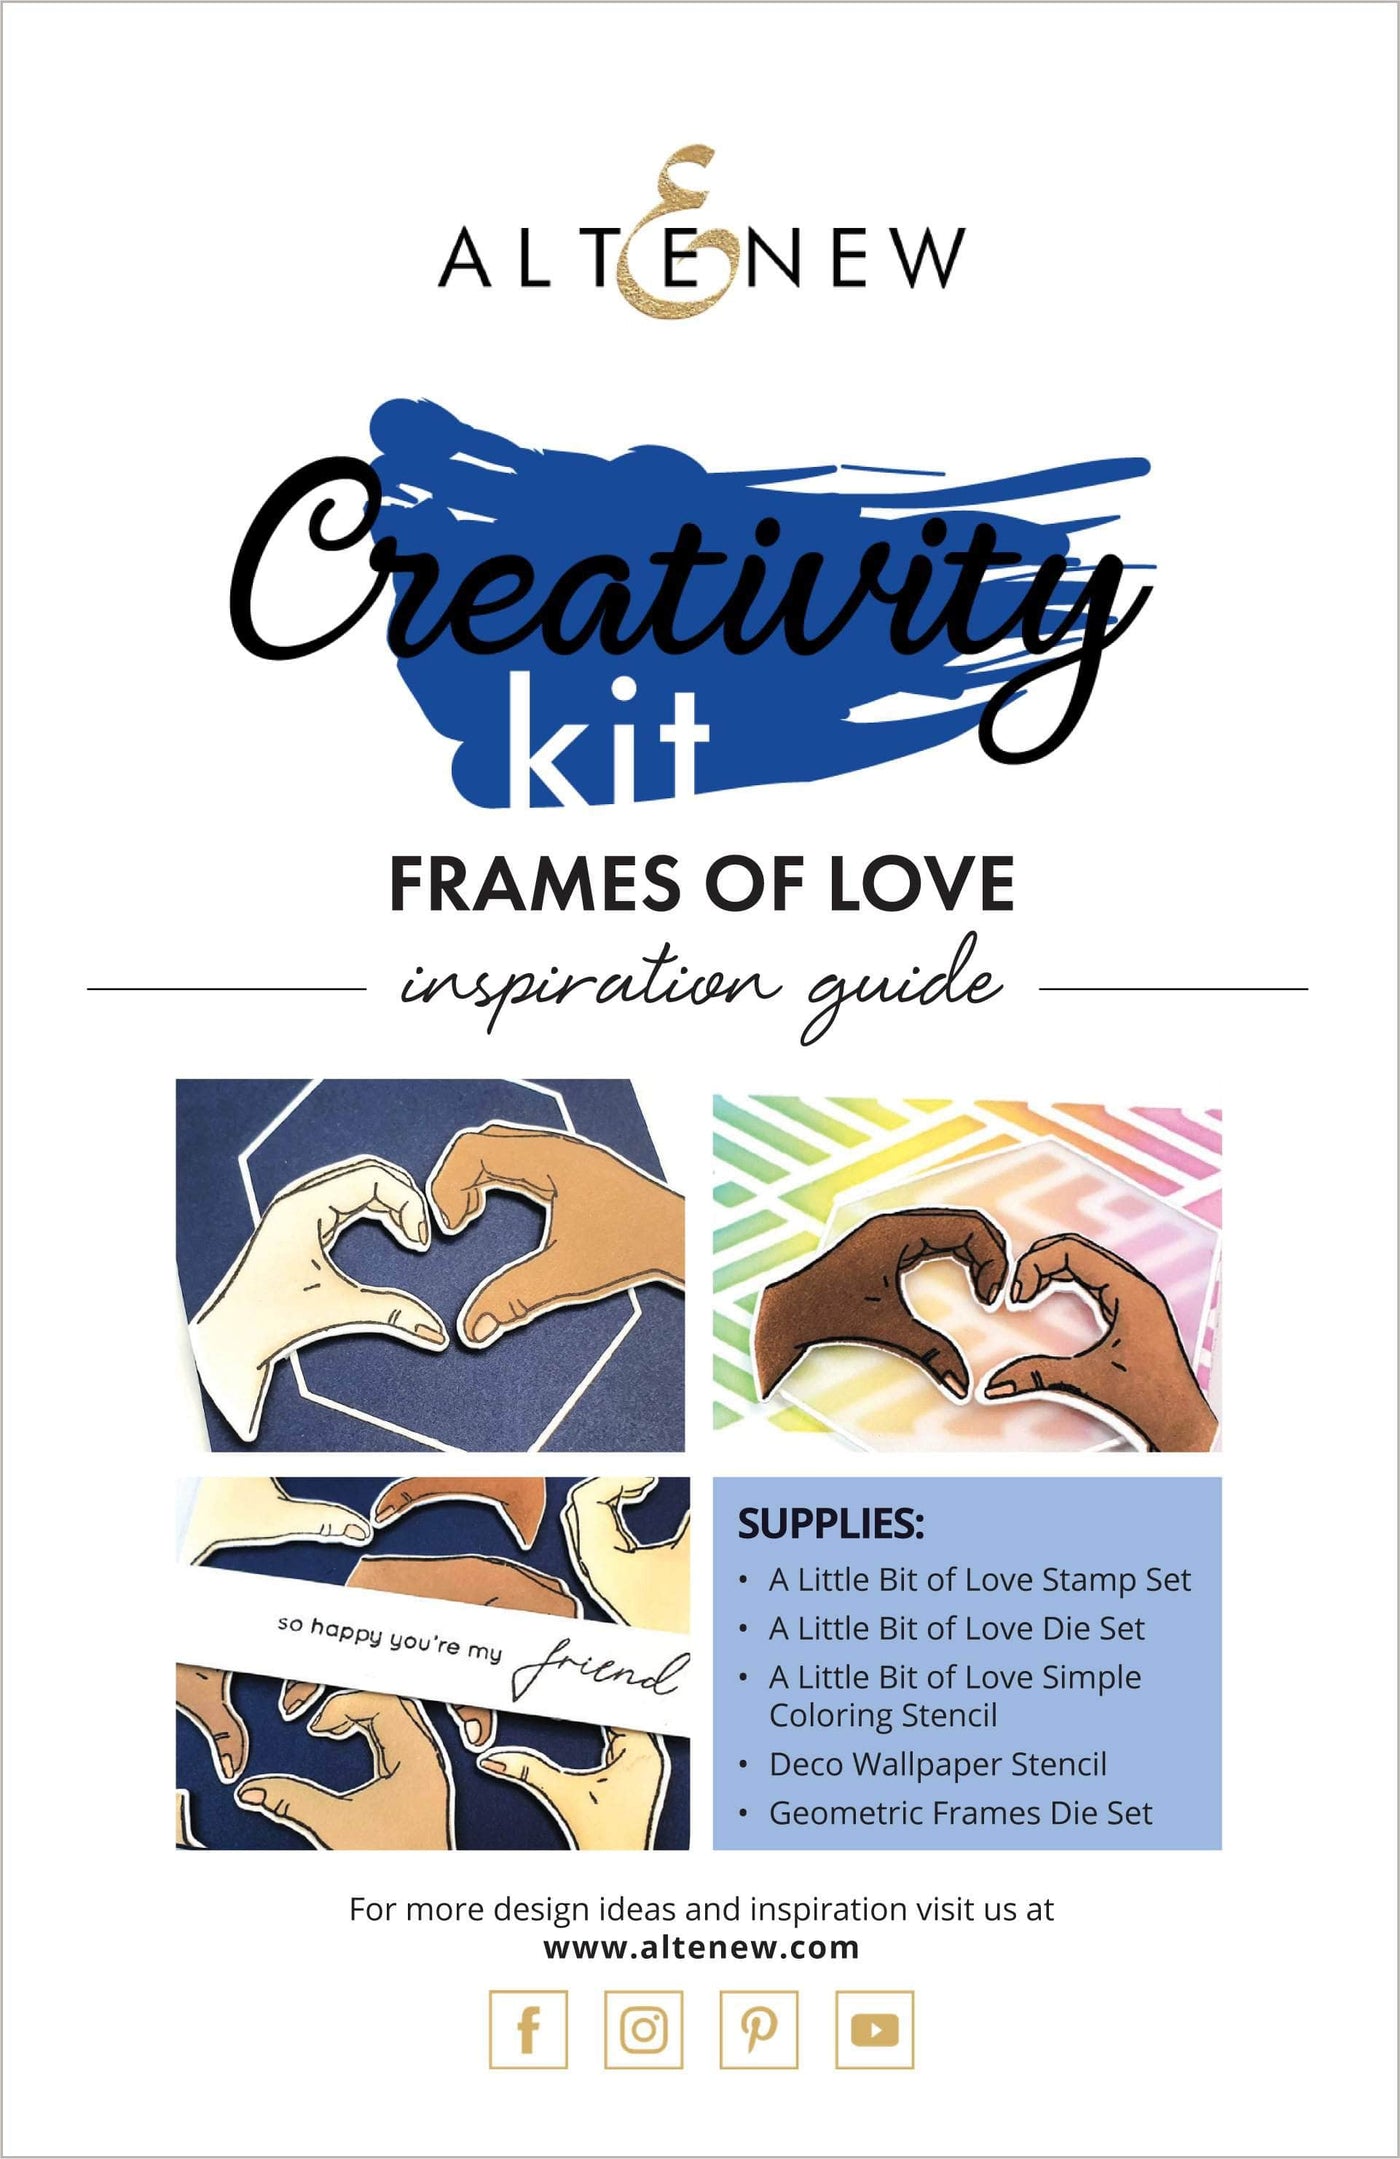 Printed Media Frames of Love Creativity Cardmaking Kit Inspiration Guide